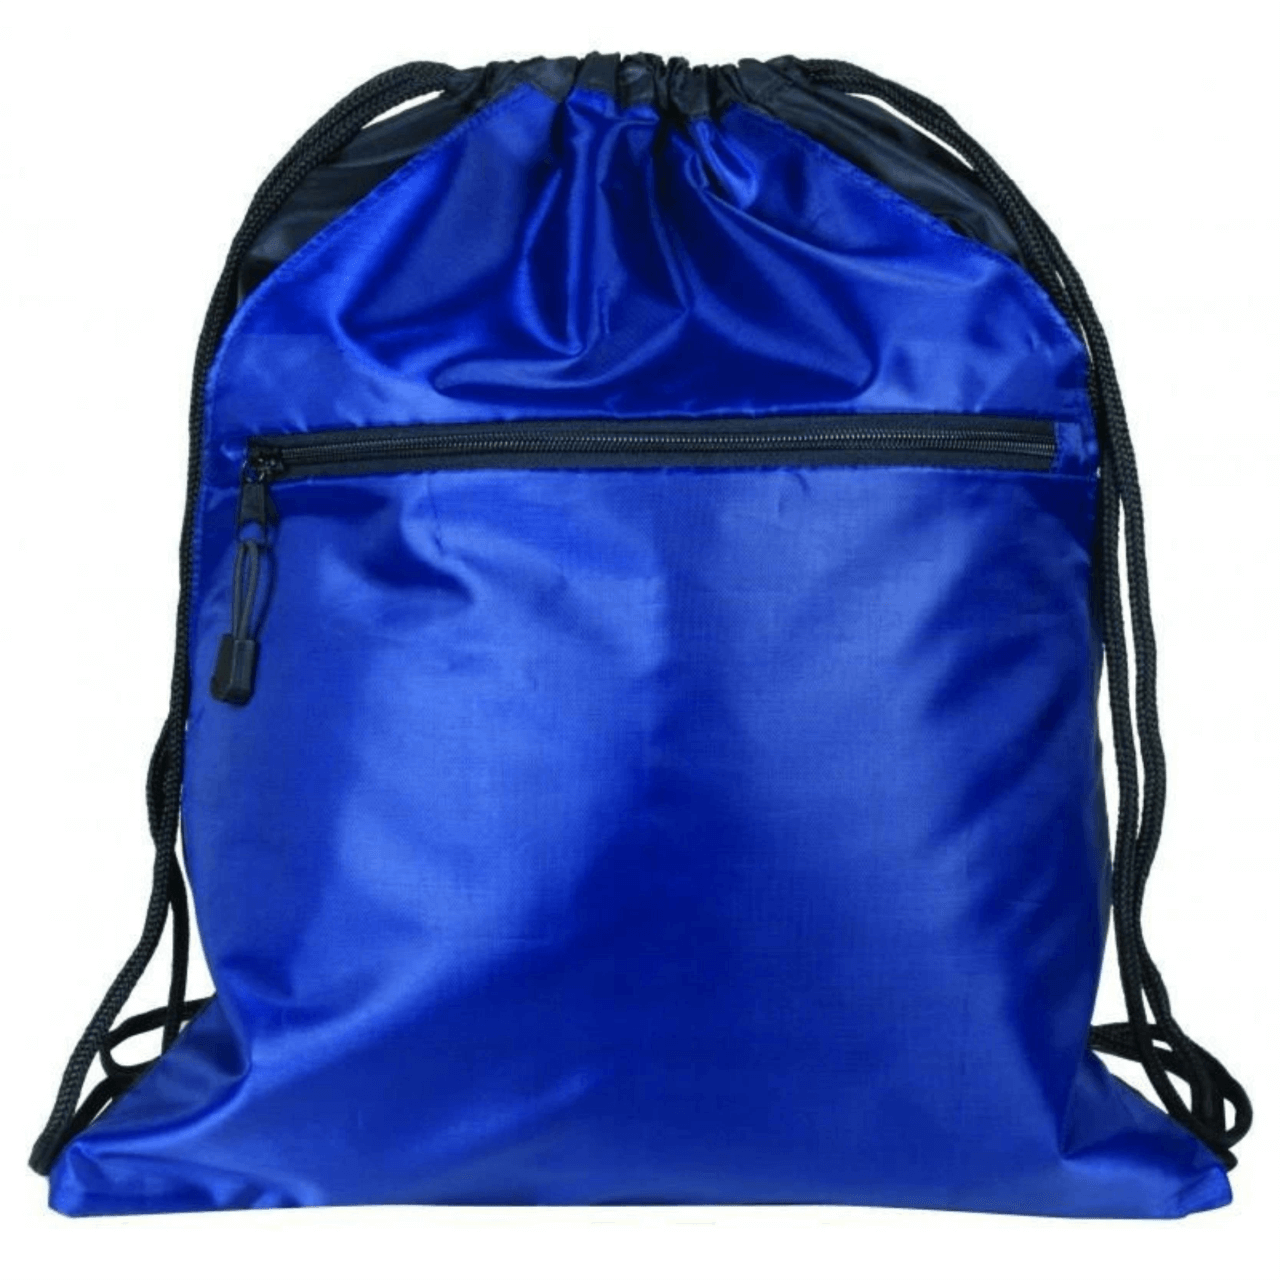 Atg Khidmat | Drawstring Bags